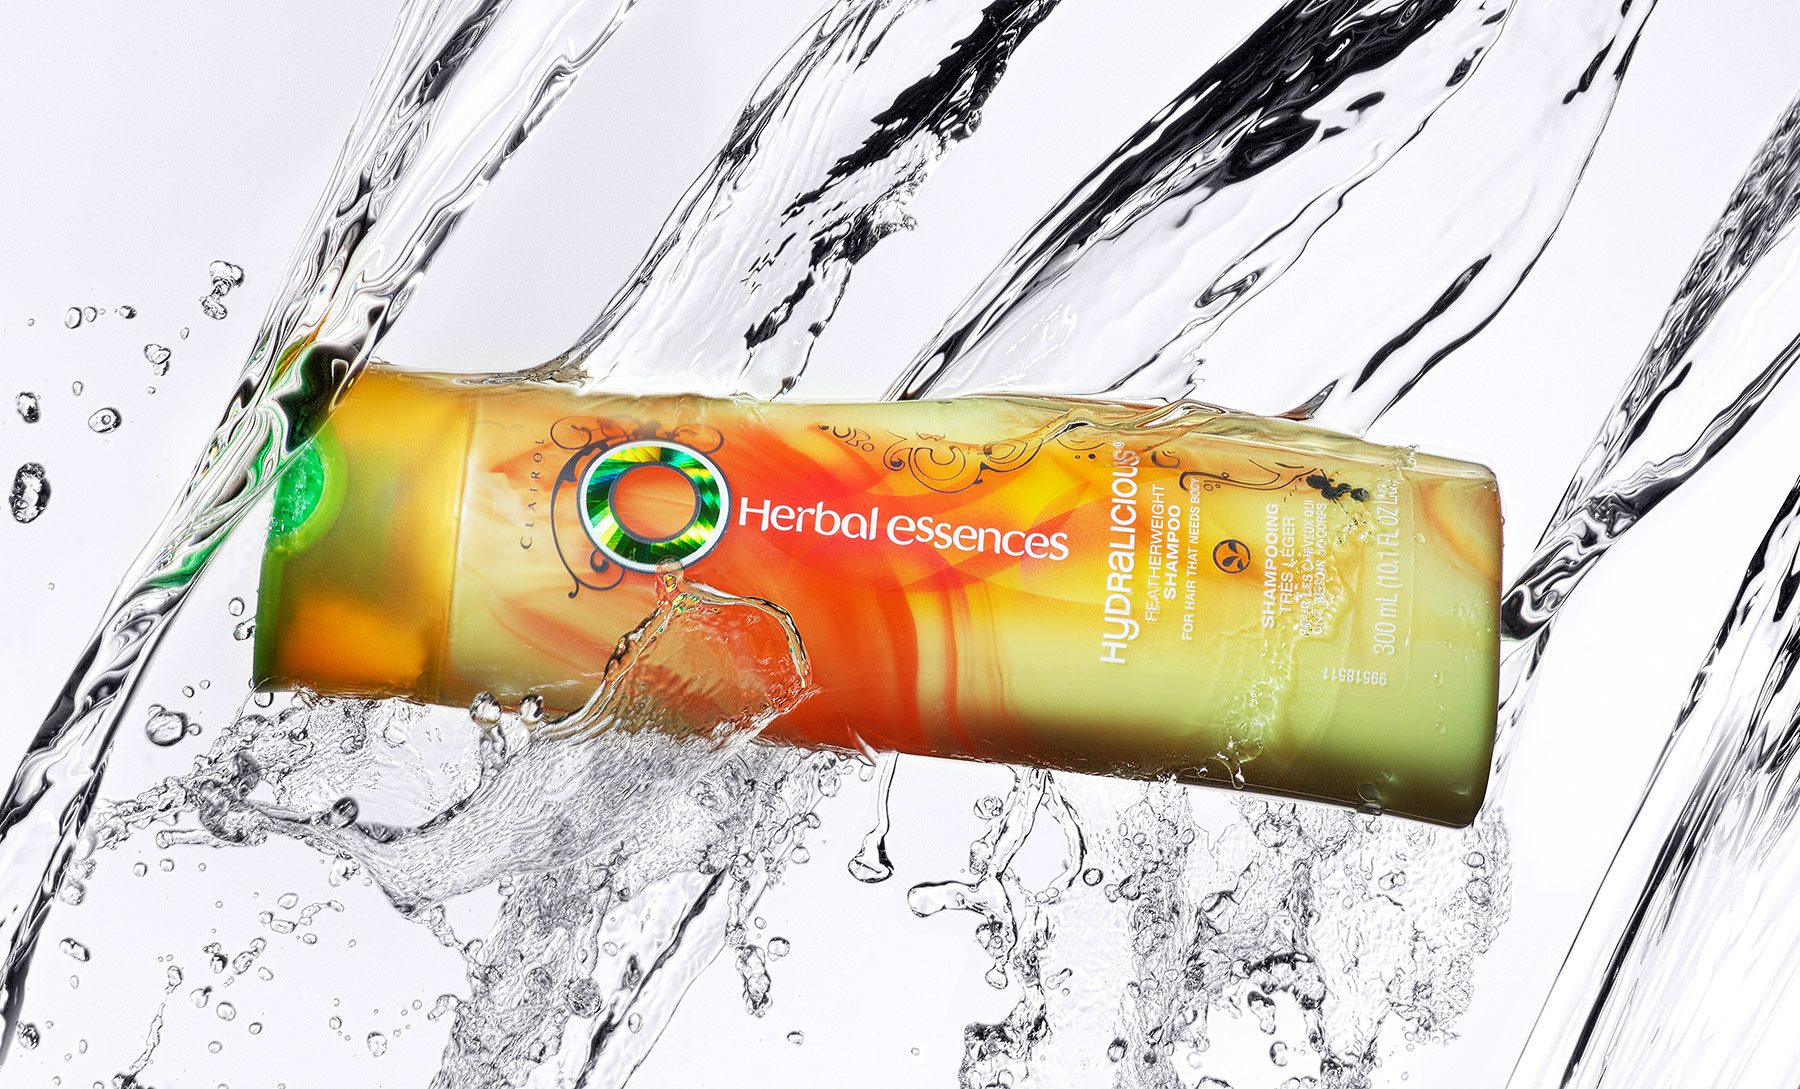 Herbal Essences Shampoo Splash | Dovis Bird Agency Reps